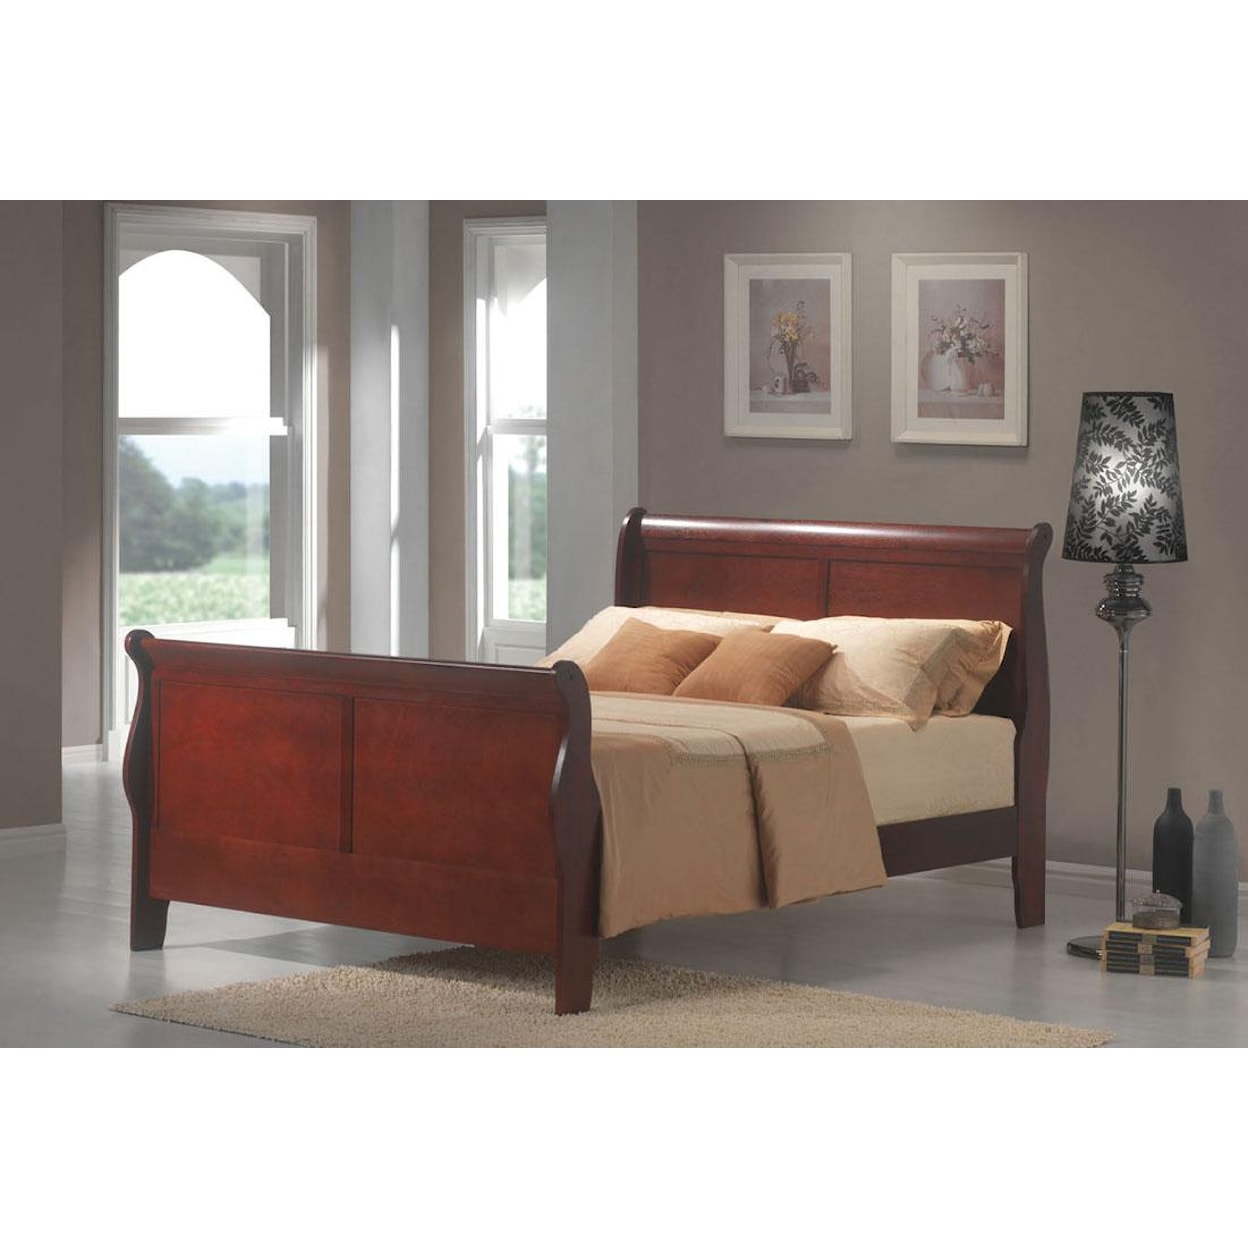 Acme Furniture Louis Philippe III Full Bed